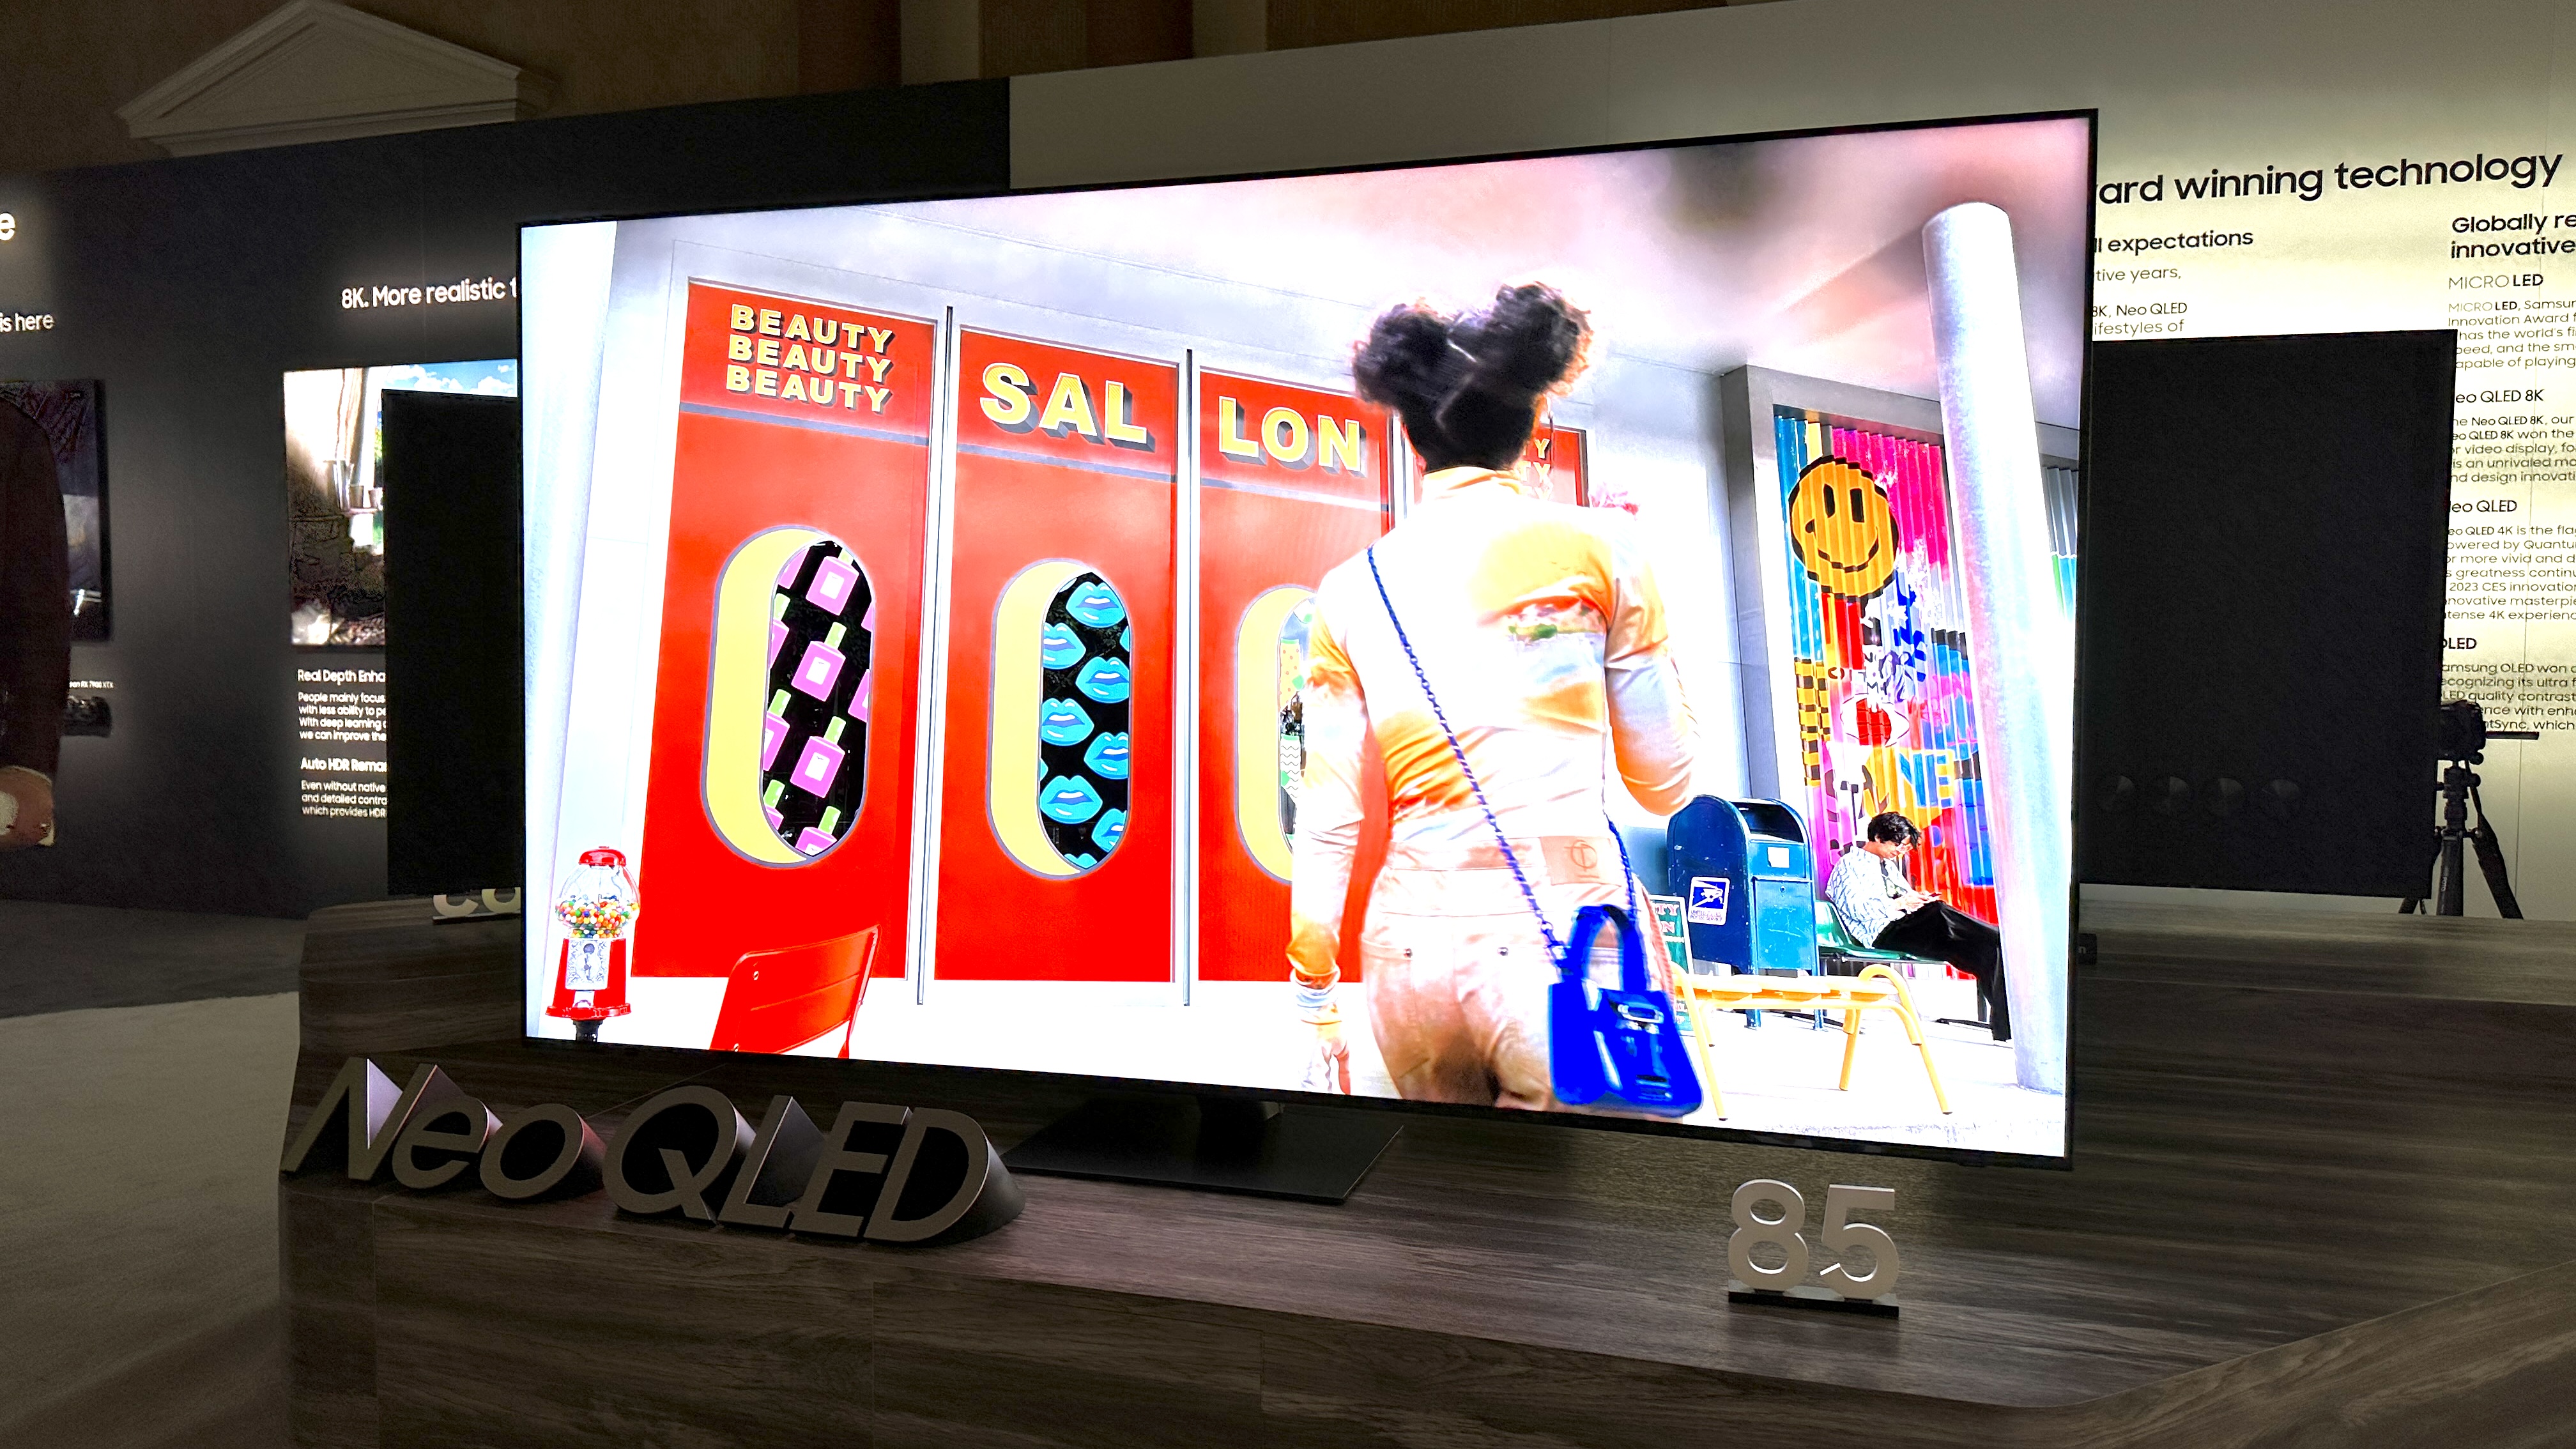 Samsung QN95C Neo QLED TV